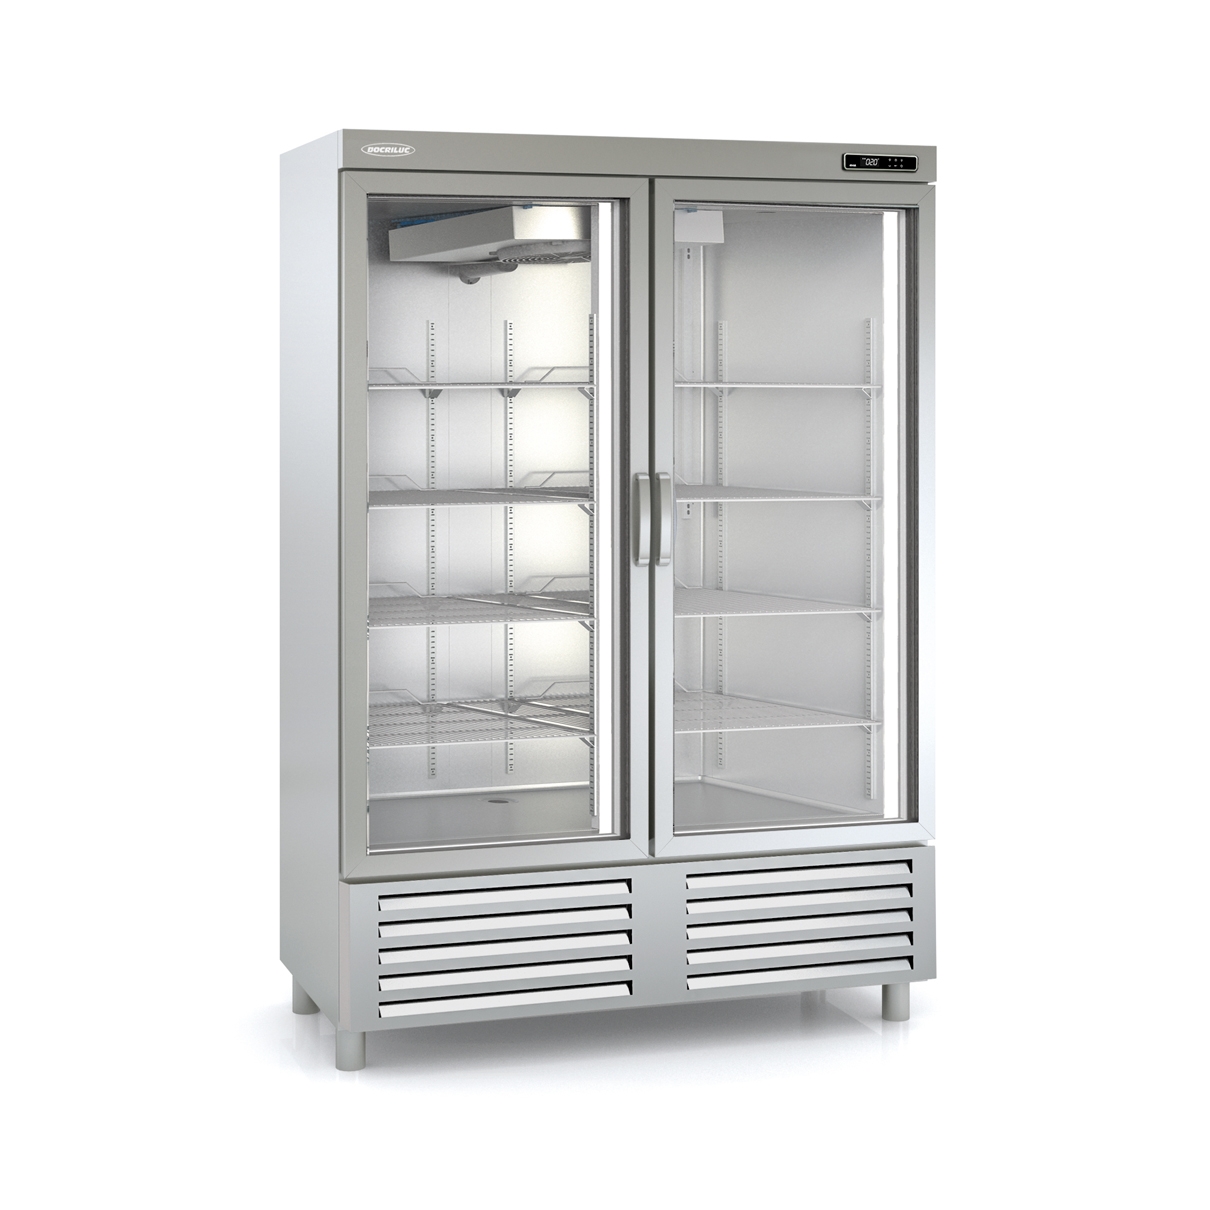 Snack Refrigerated Cabinet ARSV-140-2